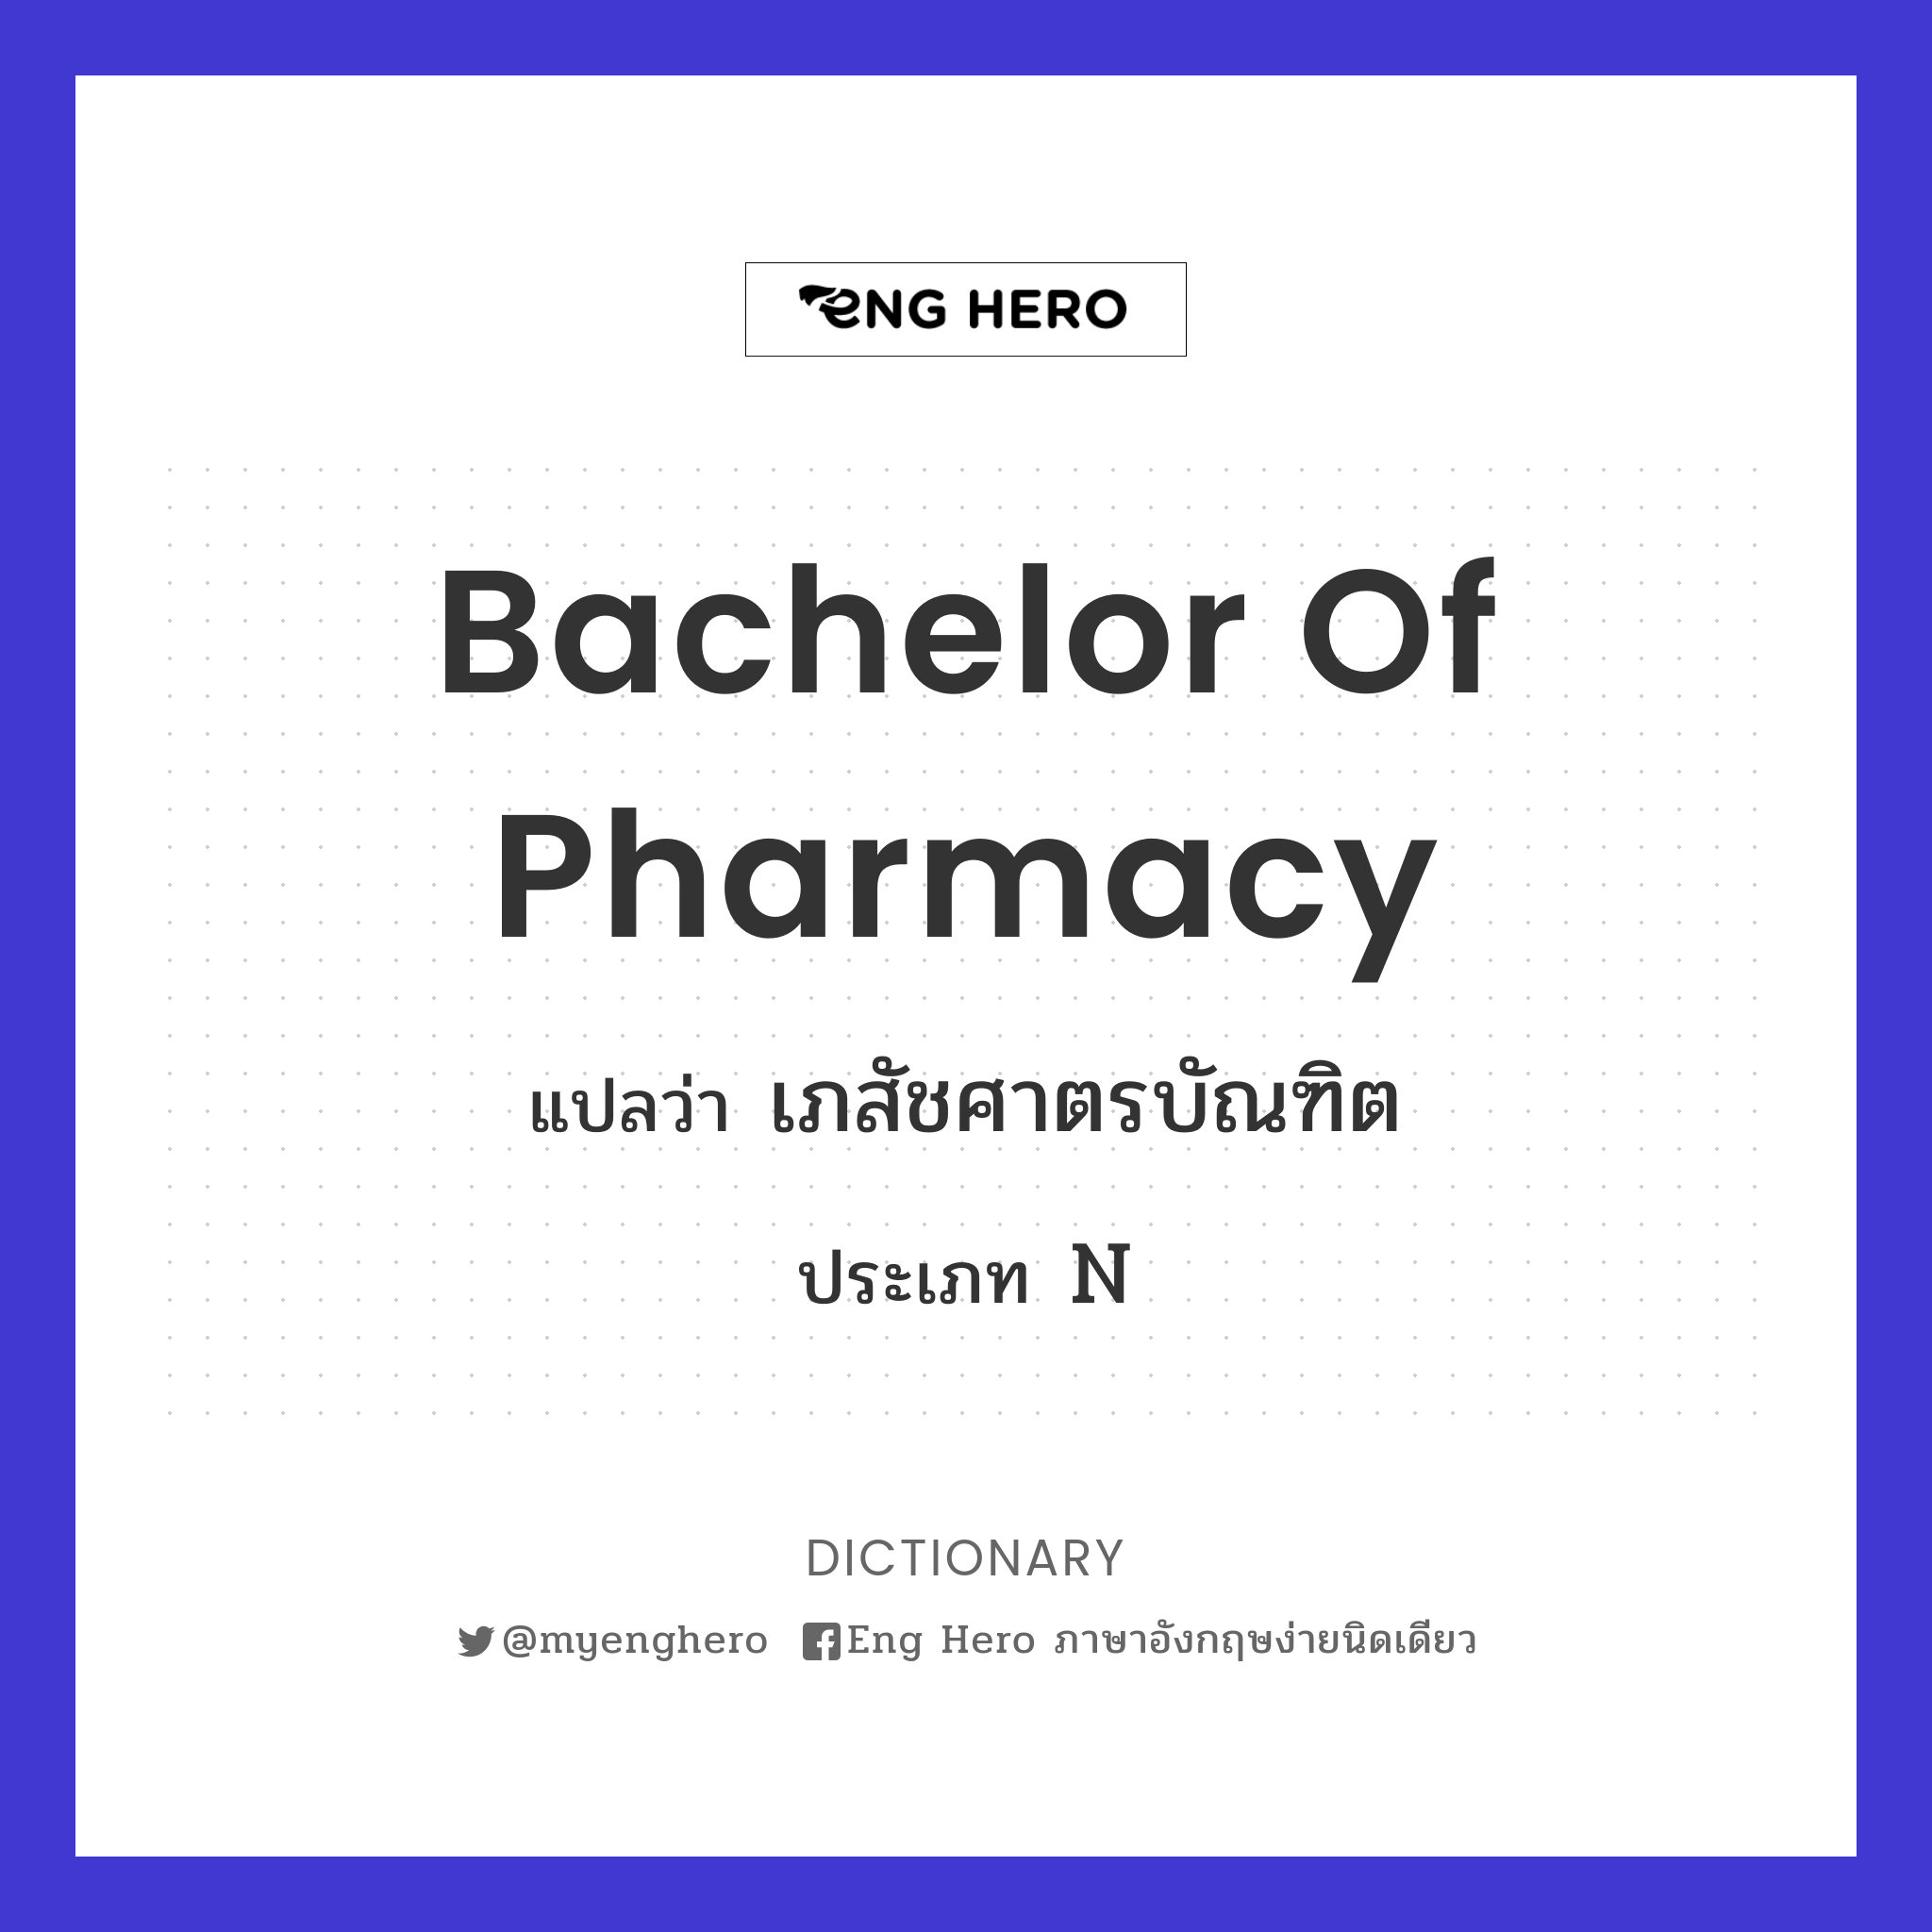 Bachelor of Pharmacy